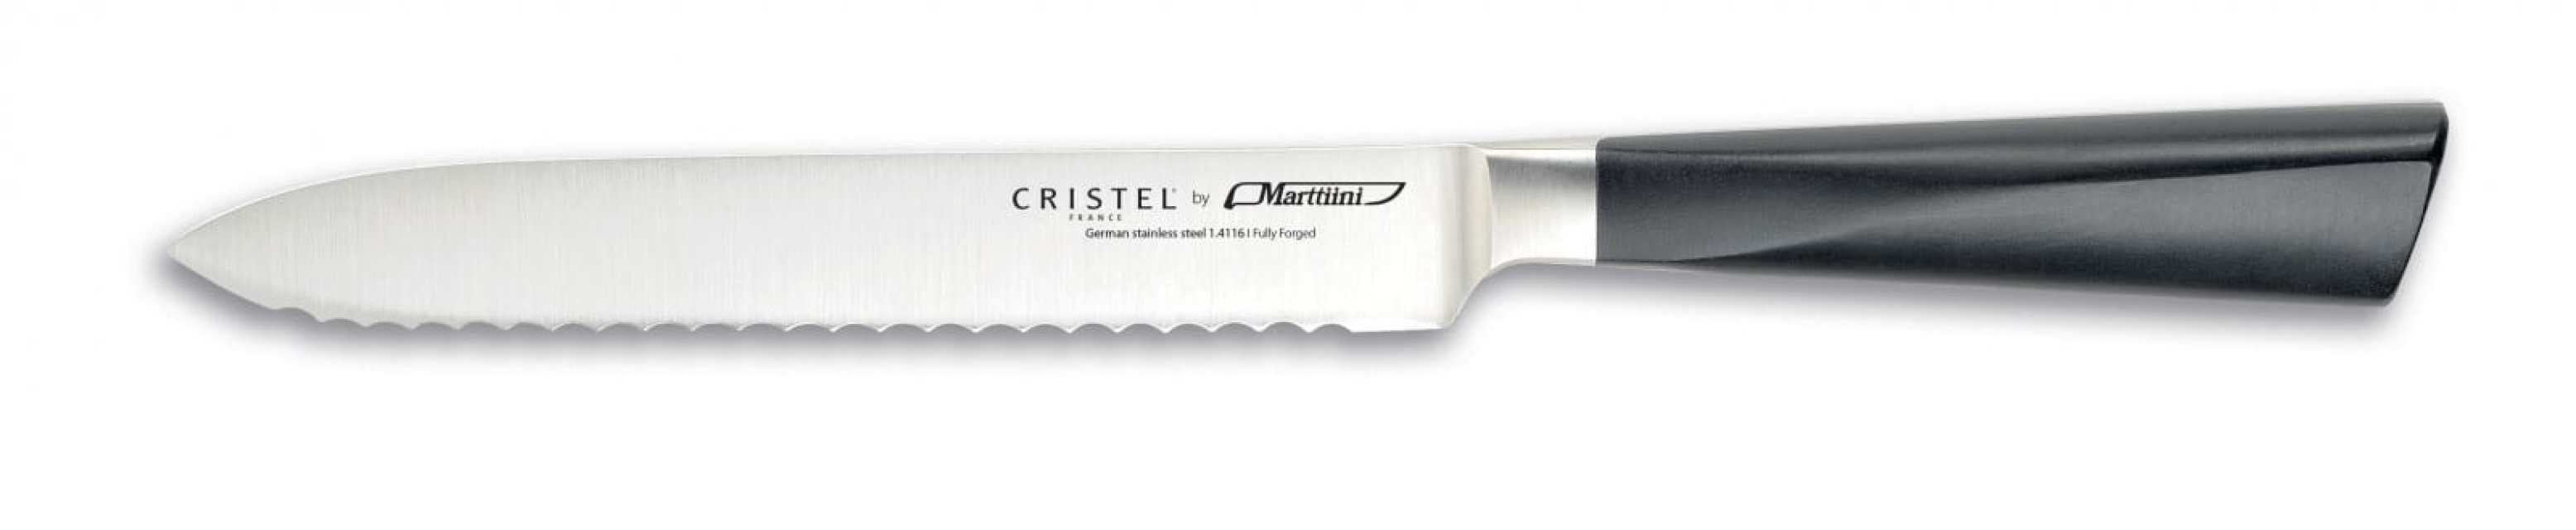 Tagget kniv 14 cm - Cristel